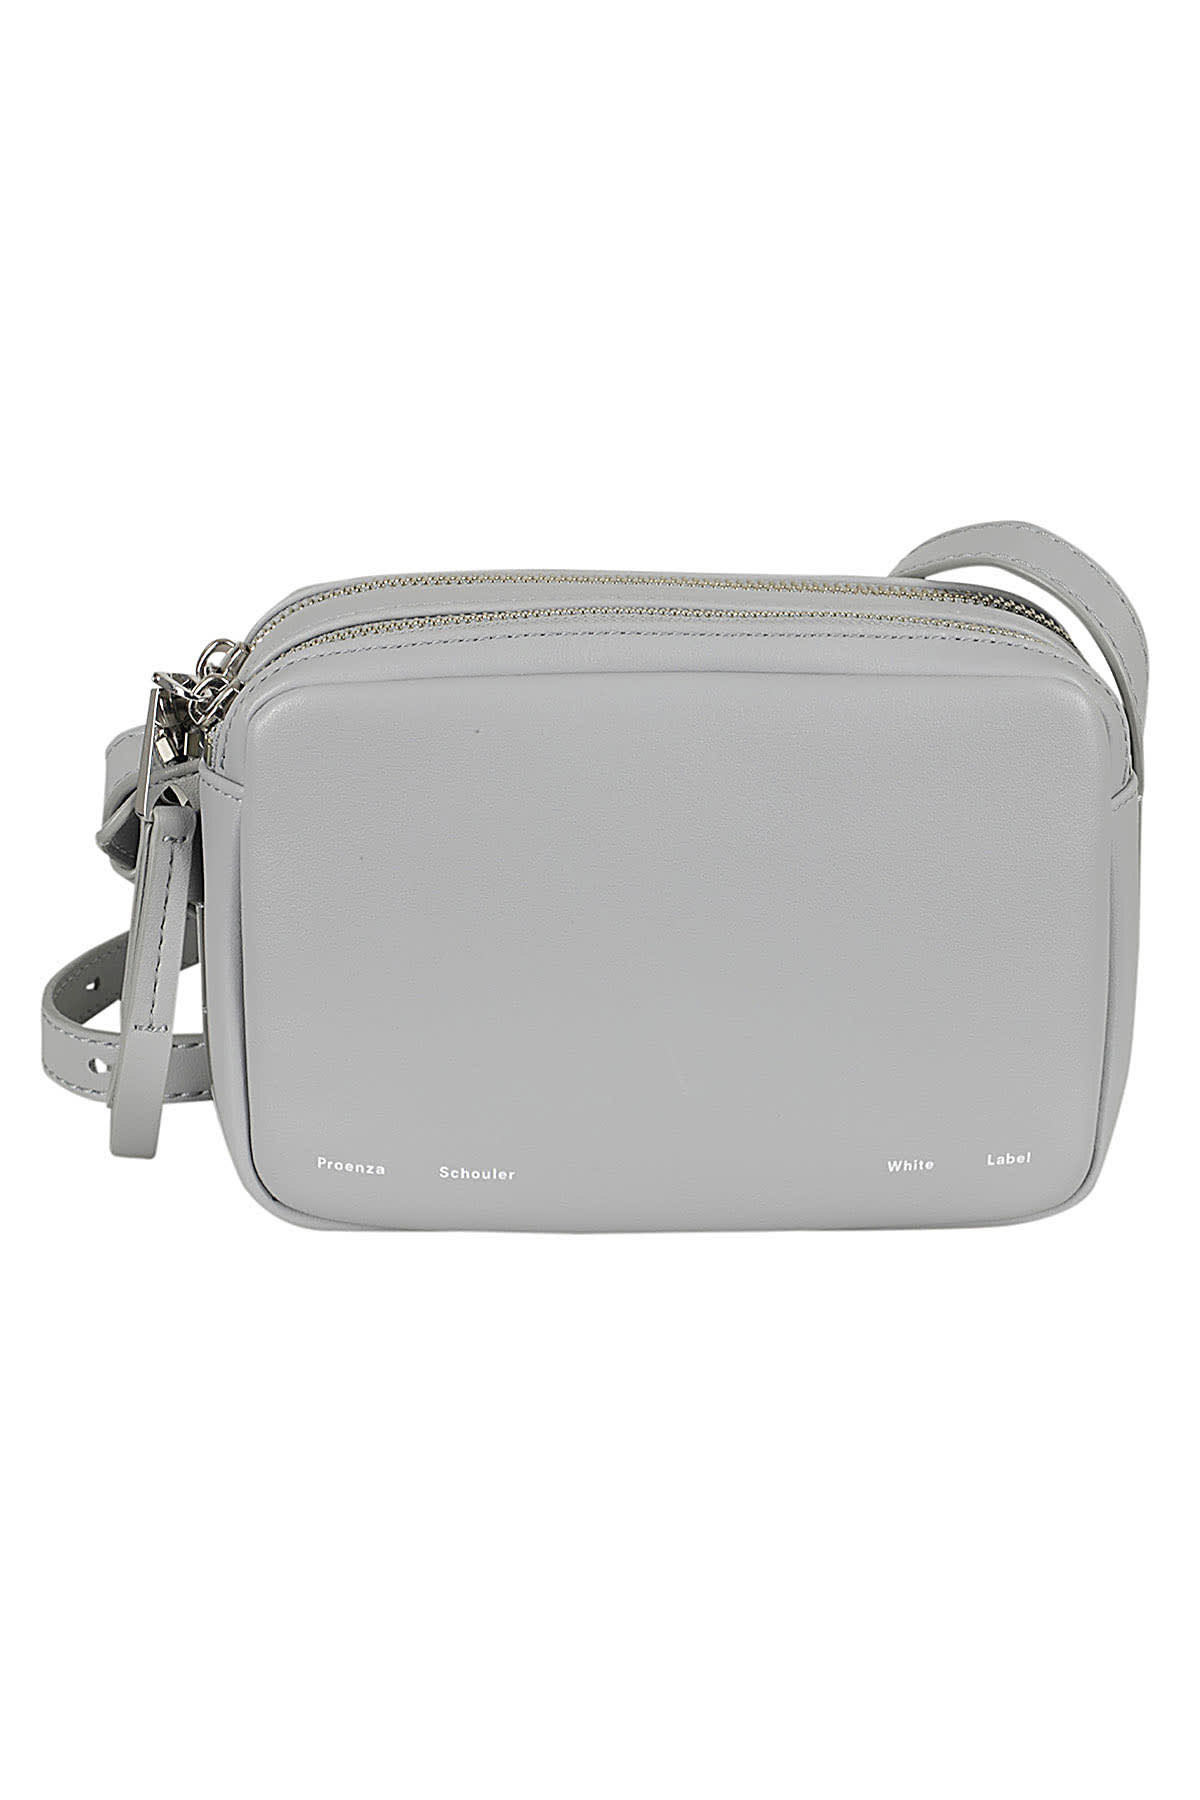 Shop Proenza Schouler White Label Watts Camera Bag